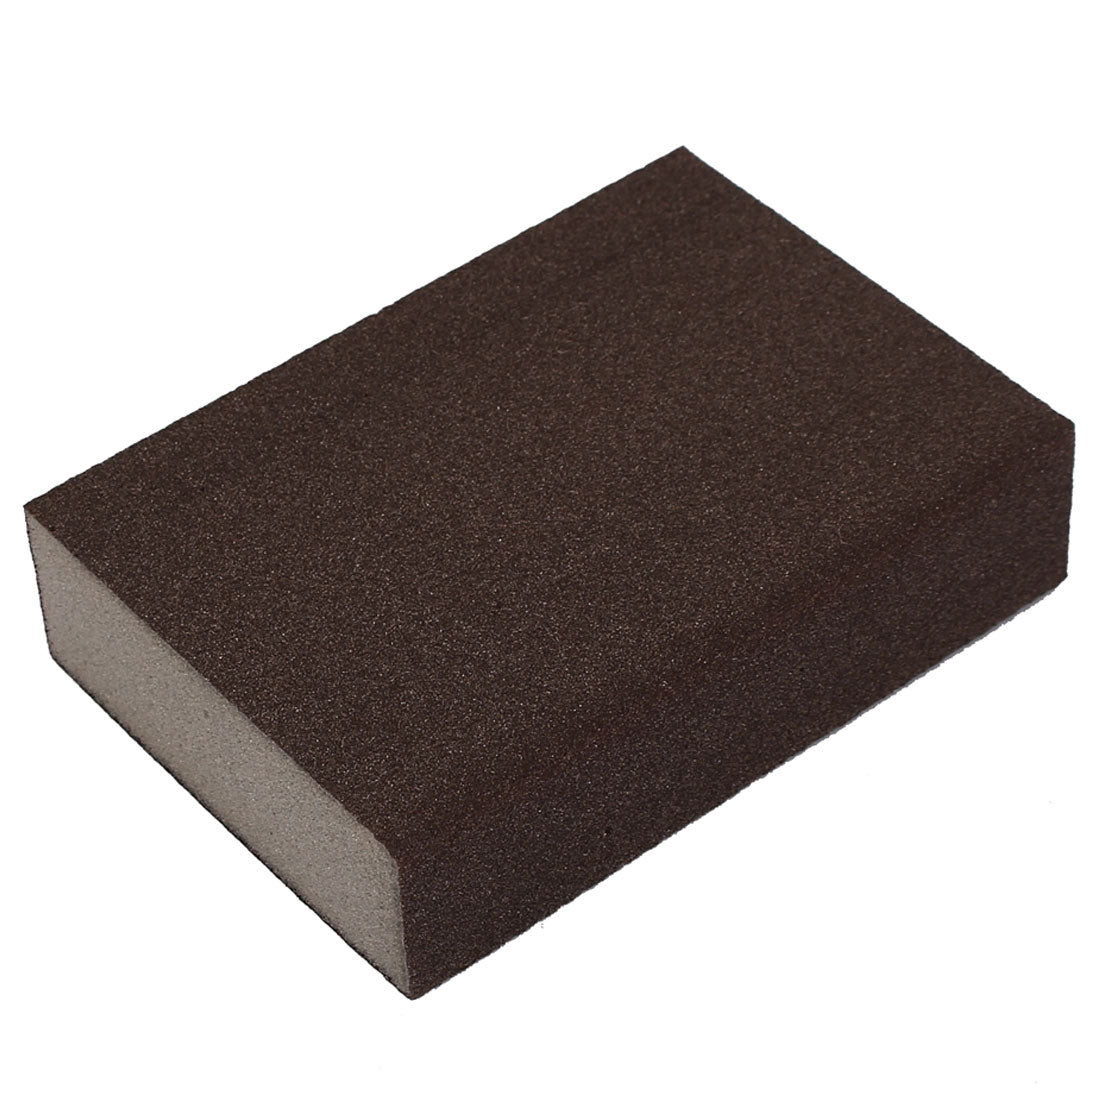 uxcell Uxcell 100mm x 70mm x 25mm 180 Grit Sponges Polishing Pad Sanding Block